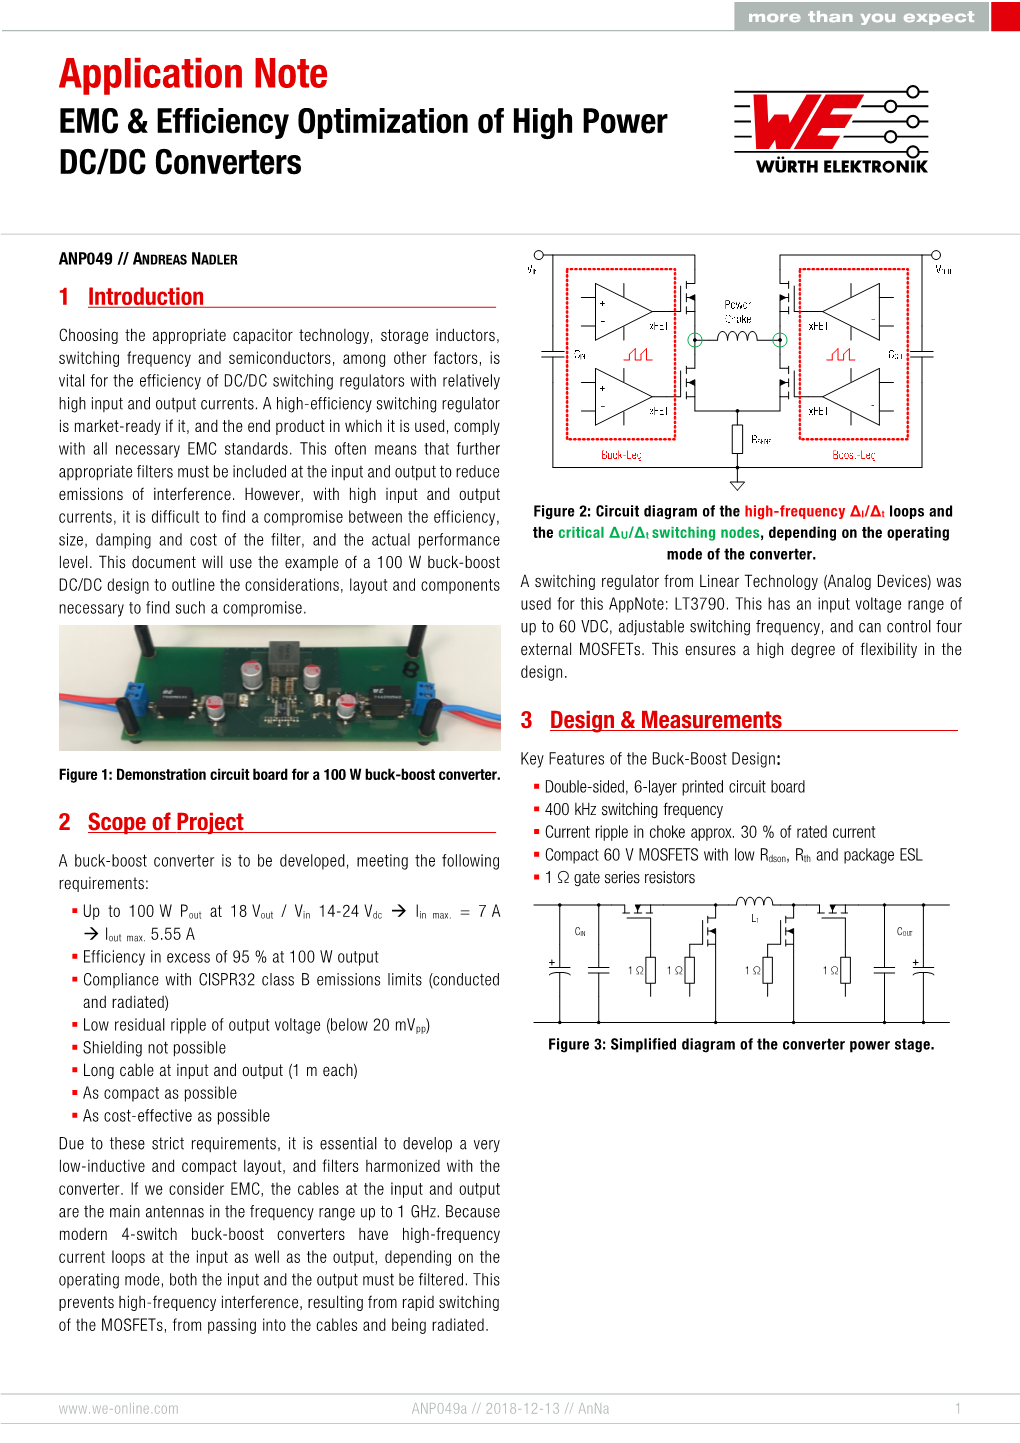 EMC & Efficiency Optimization of High Power DC/DC Converters